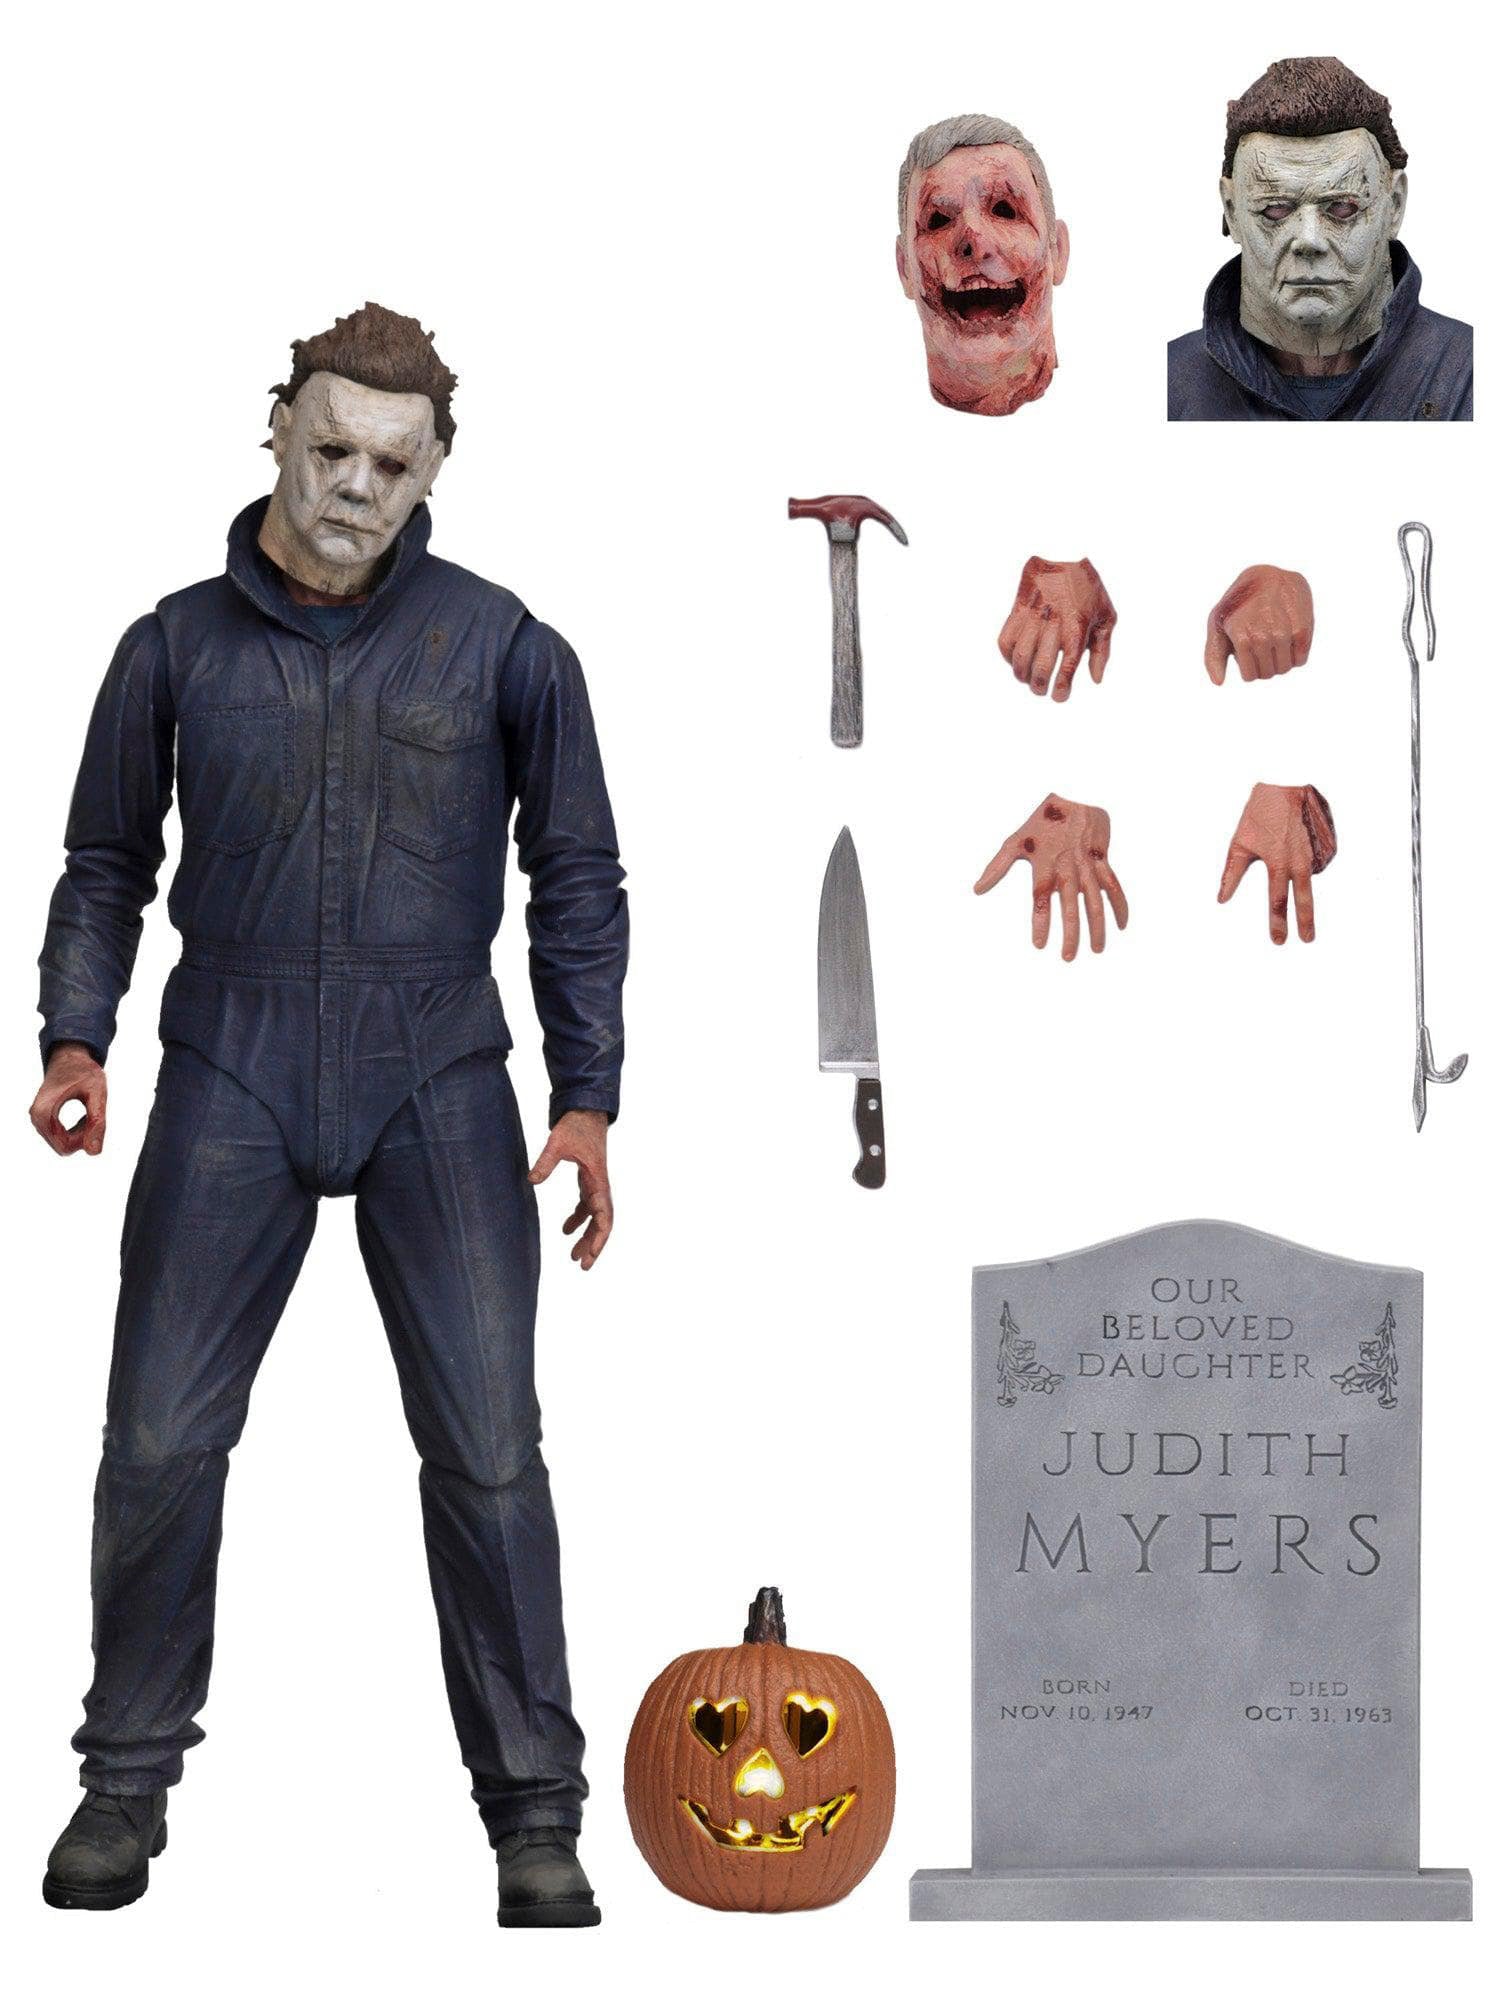 NECA - Halloween (2018) - 7" Action Figure - Ultimate Michael Myers - costumes.com